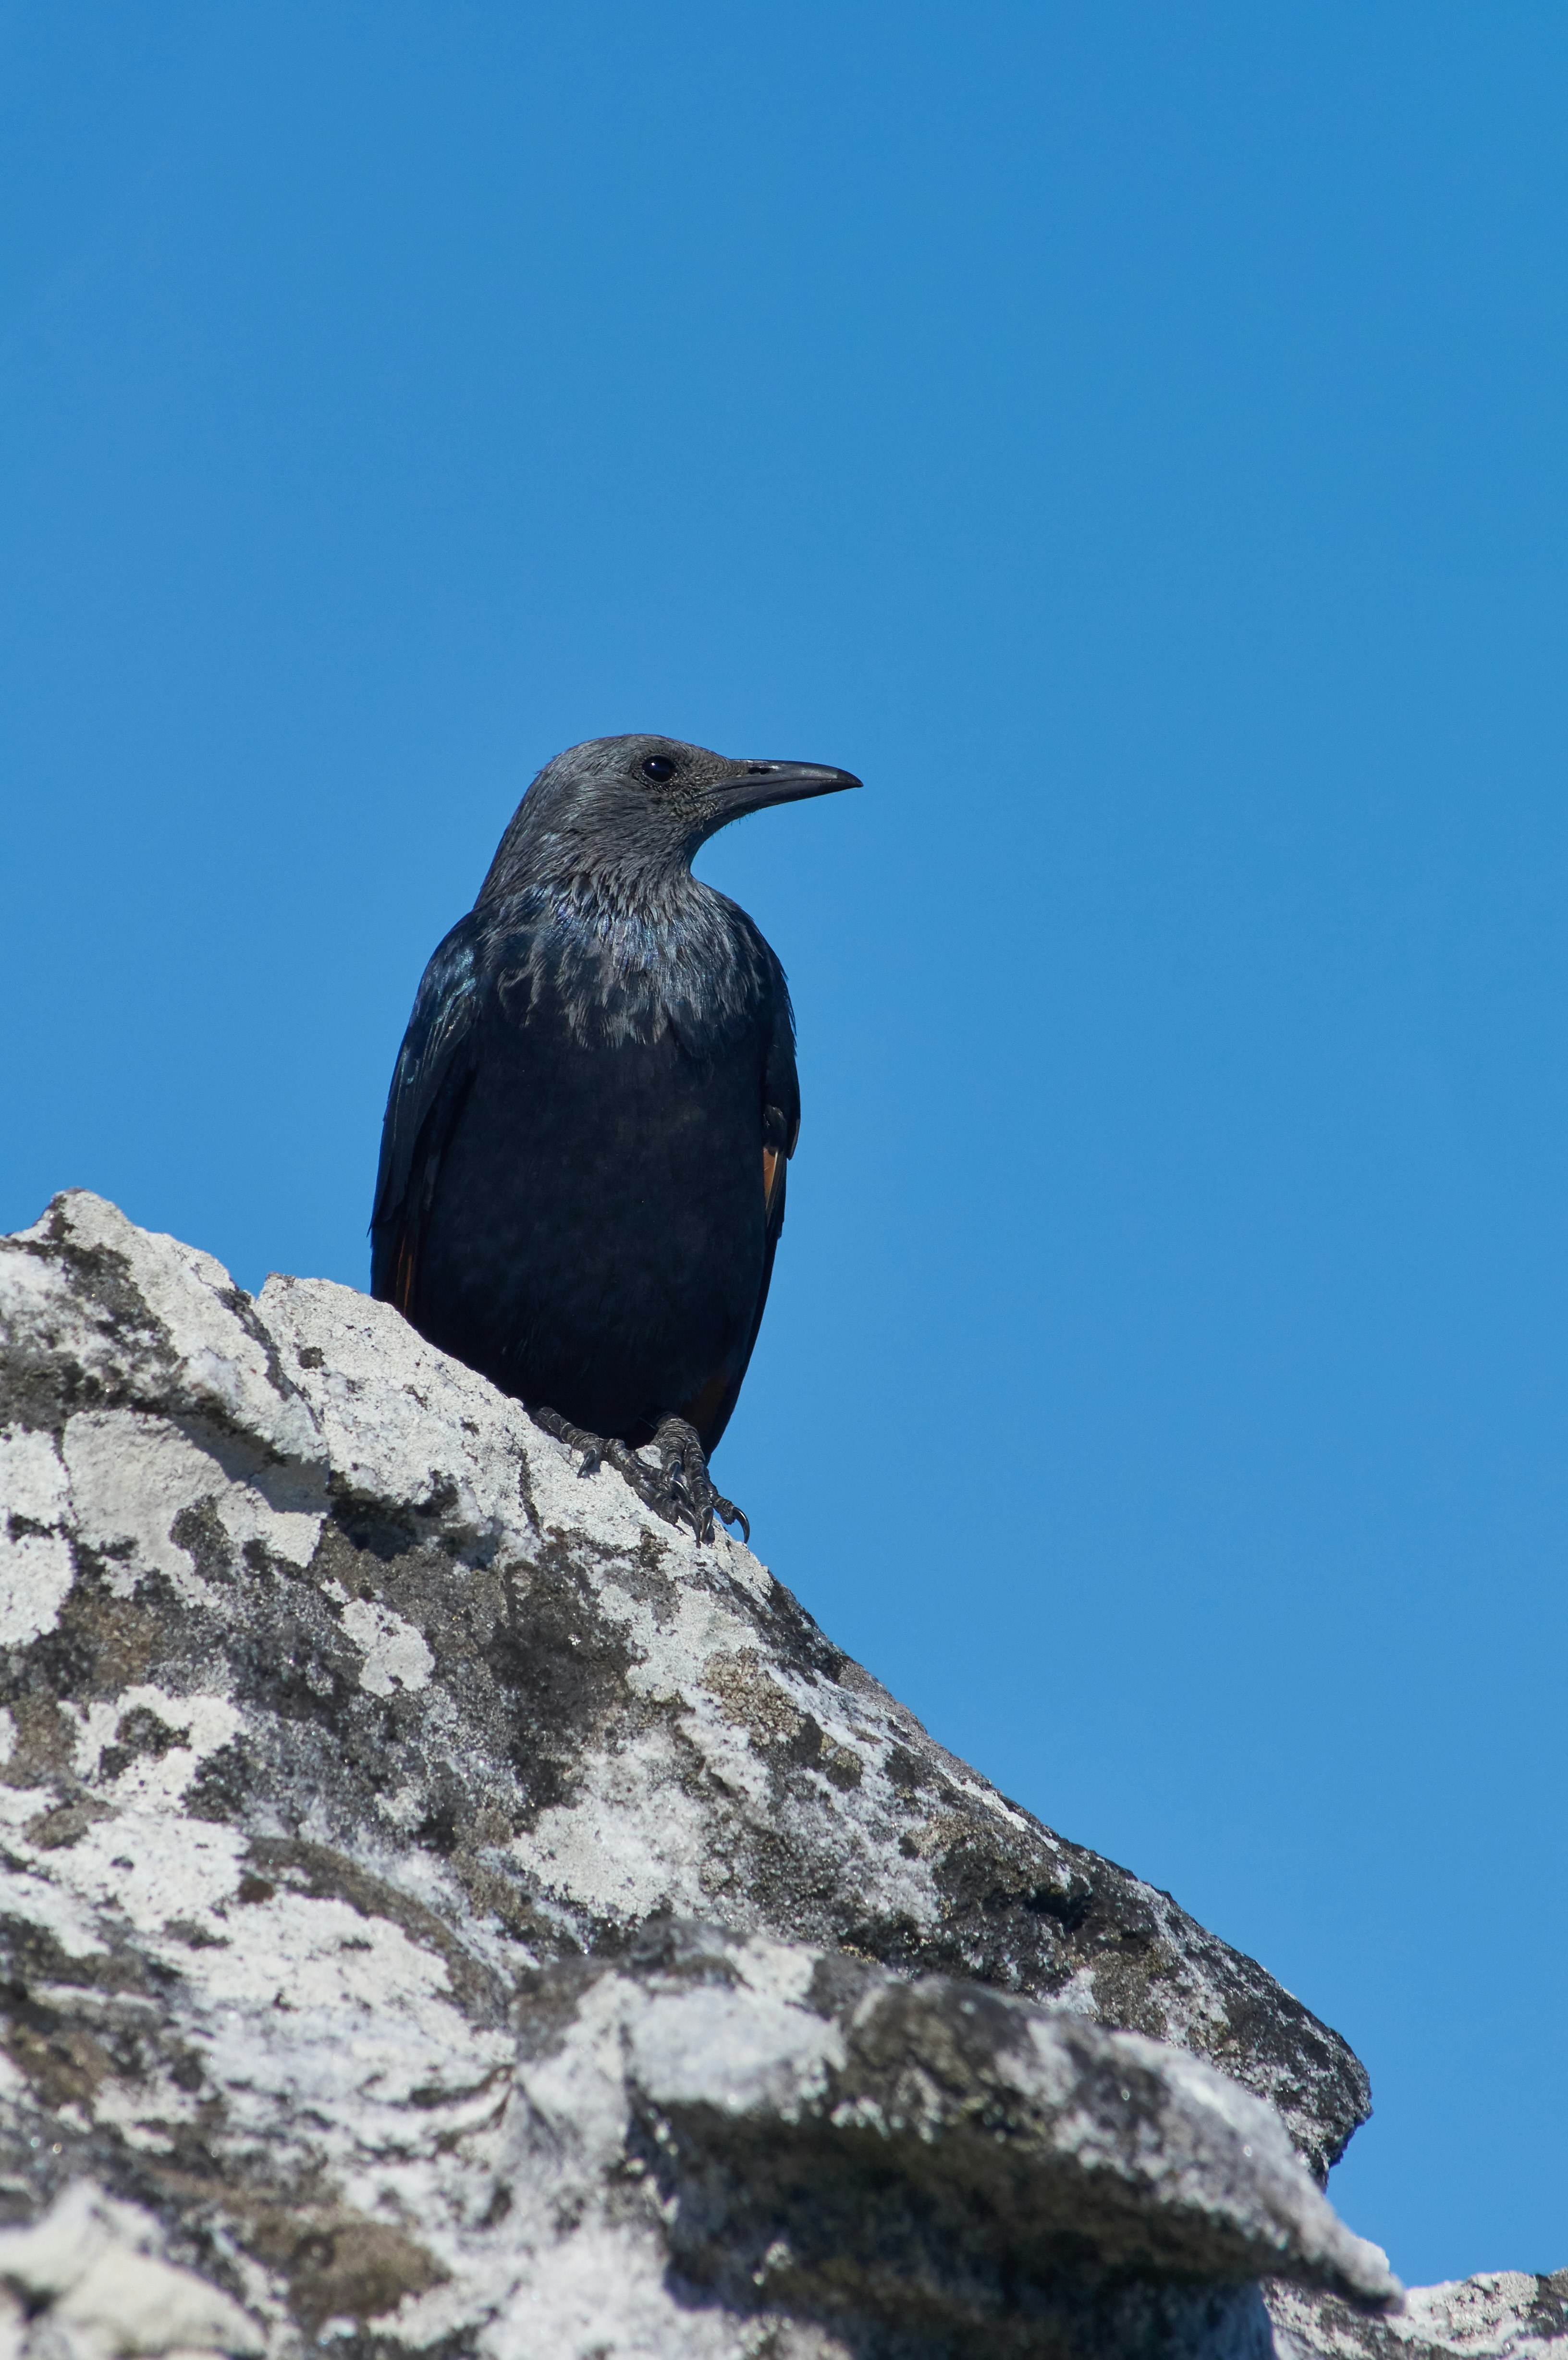 black bird perched on rock